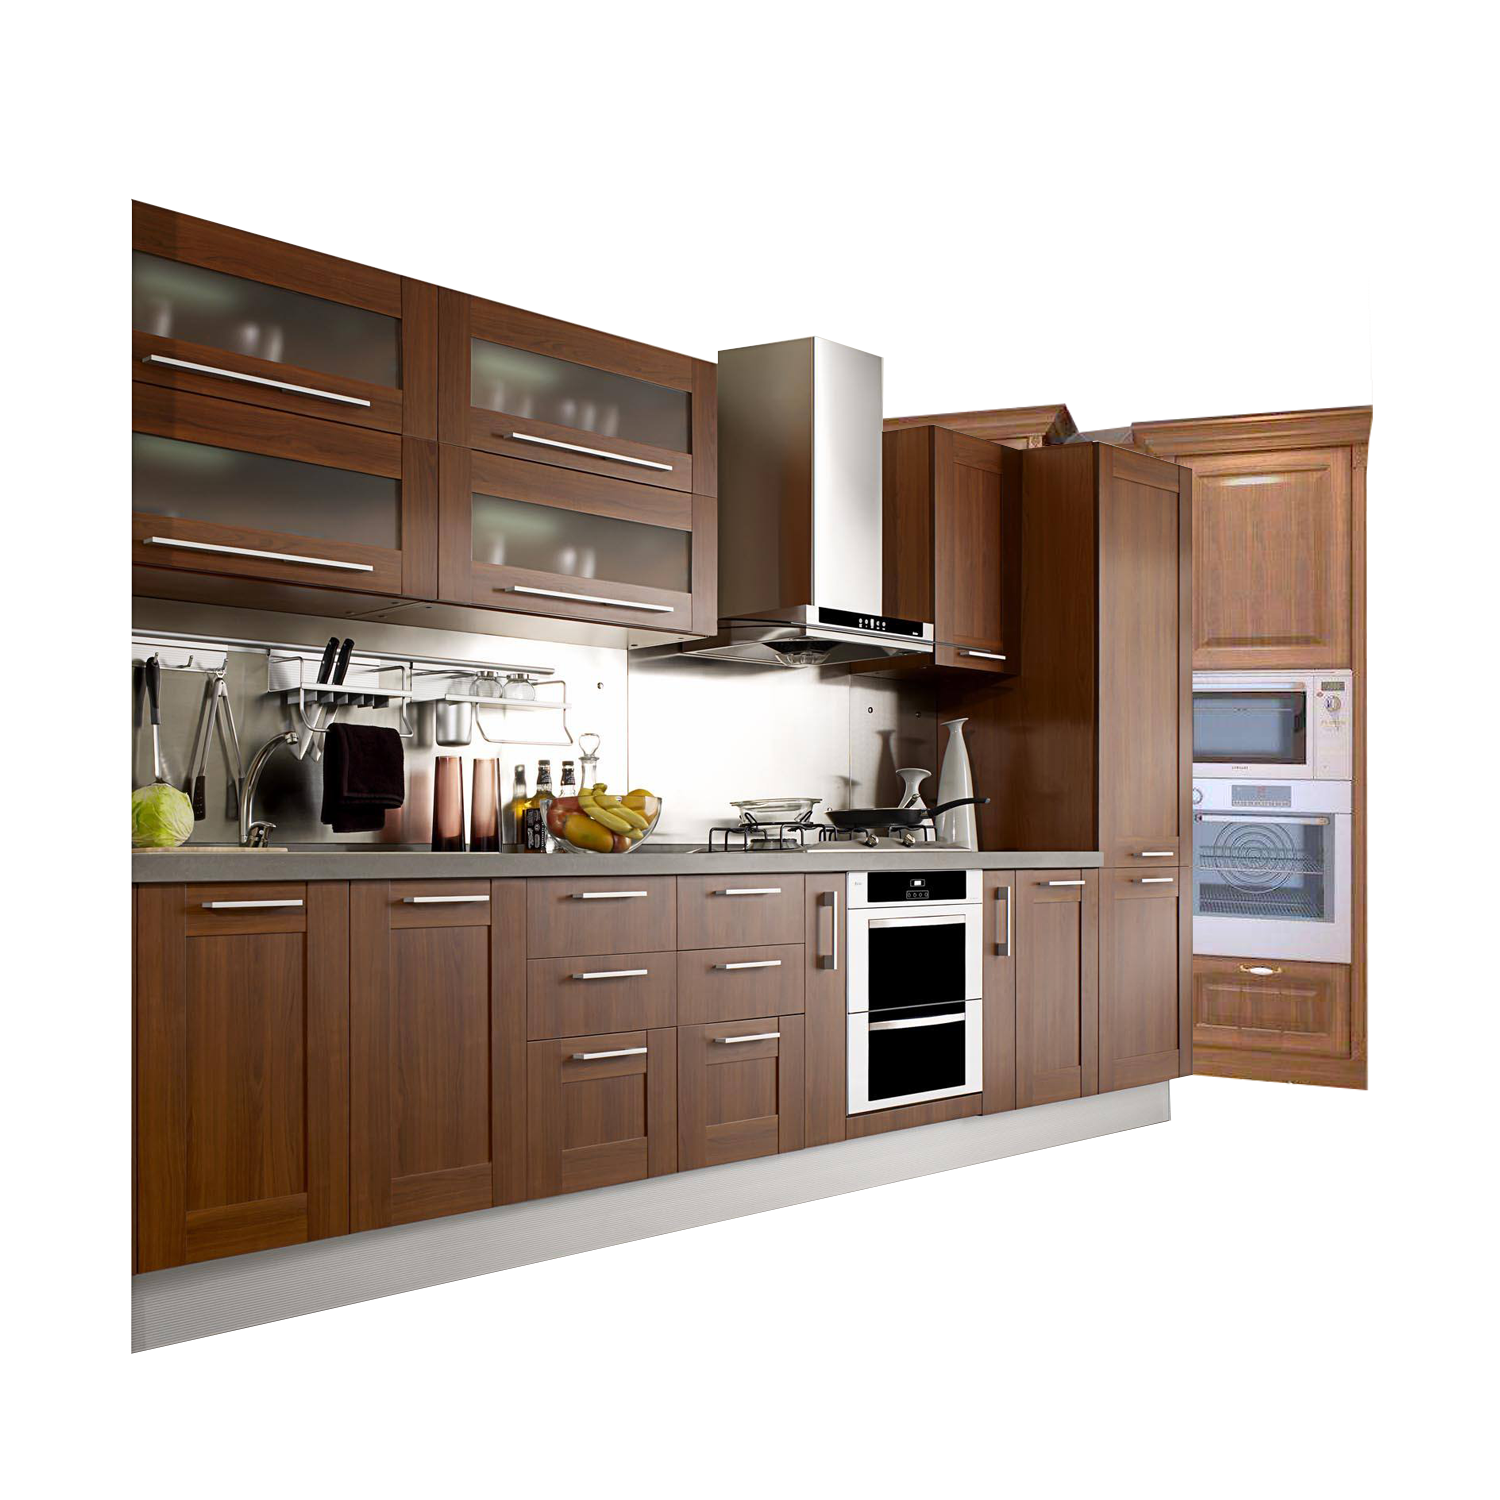 Download PNG image - Kitchen Interior PNG Image 